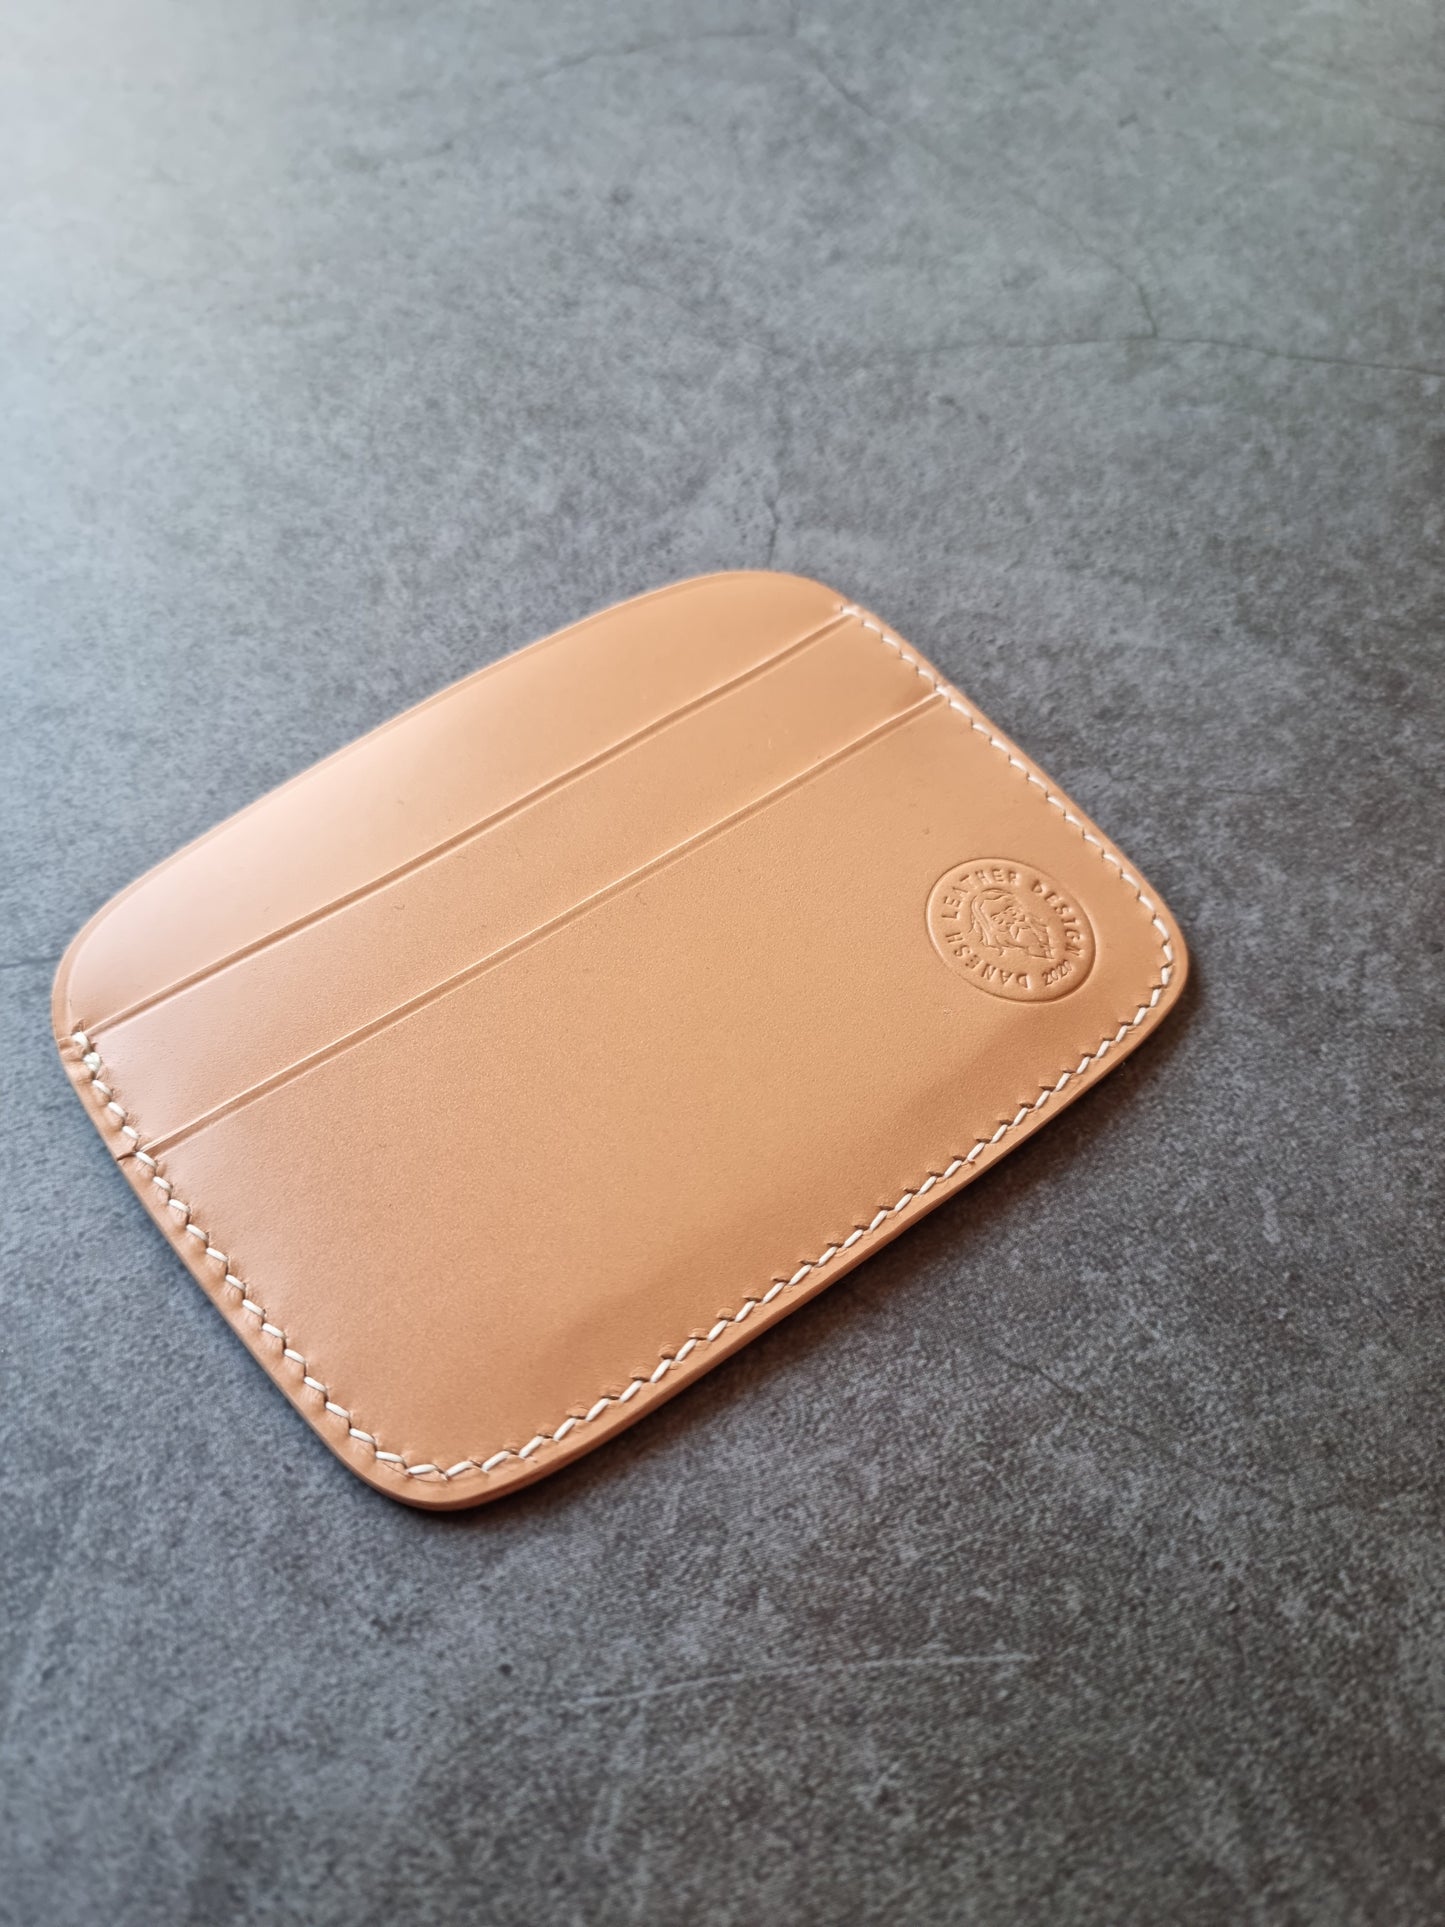 The Bilge card holder | DIY | Pdf - Pattern